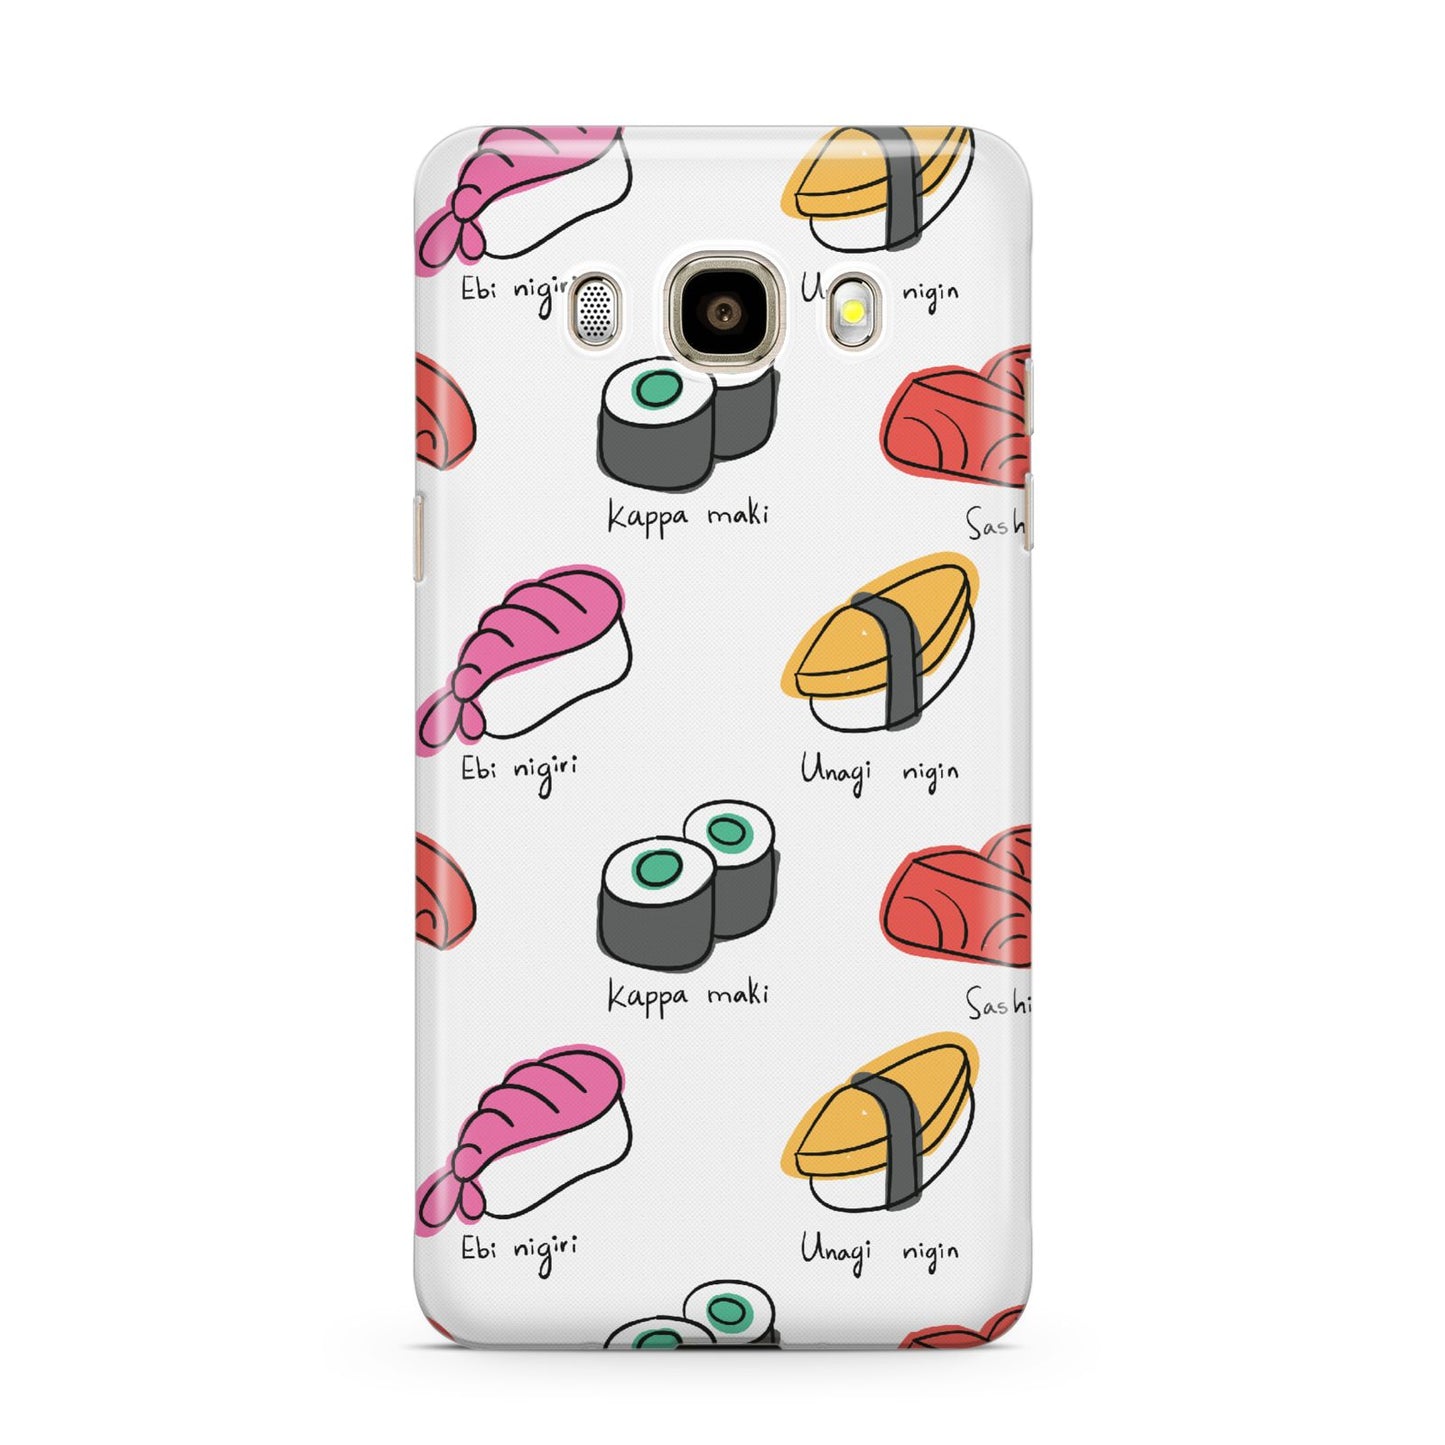 Sashimi Kappa Maki Sushi Samsung Galaxy J7 2016 Case on gold phone